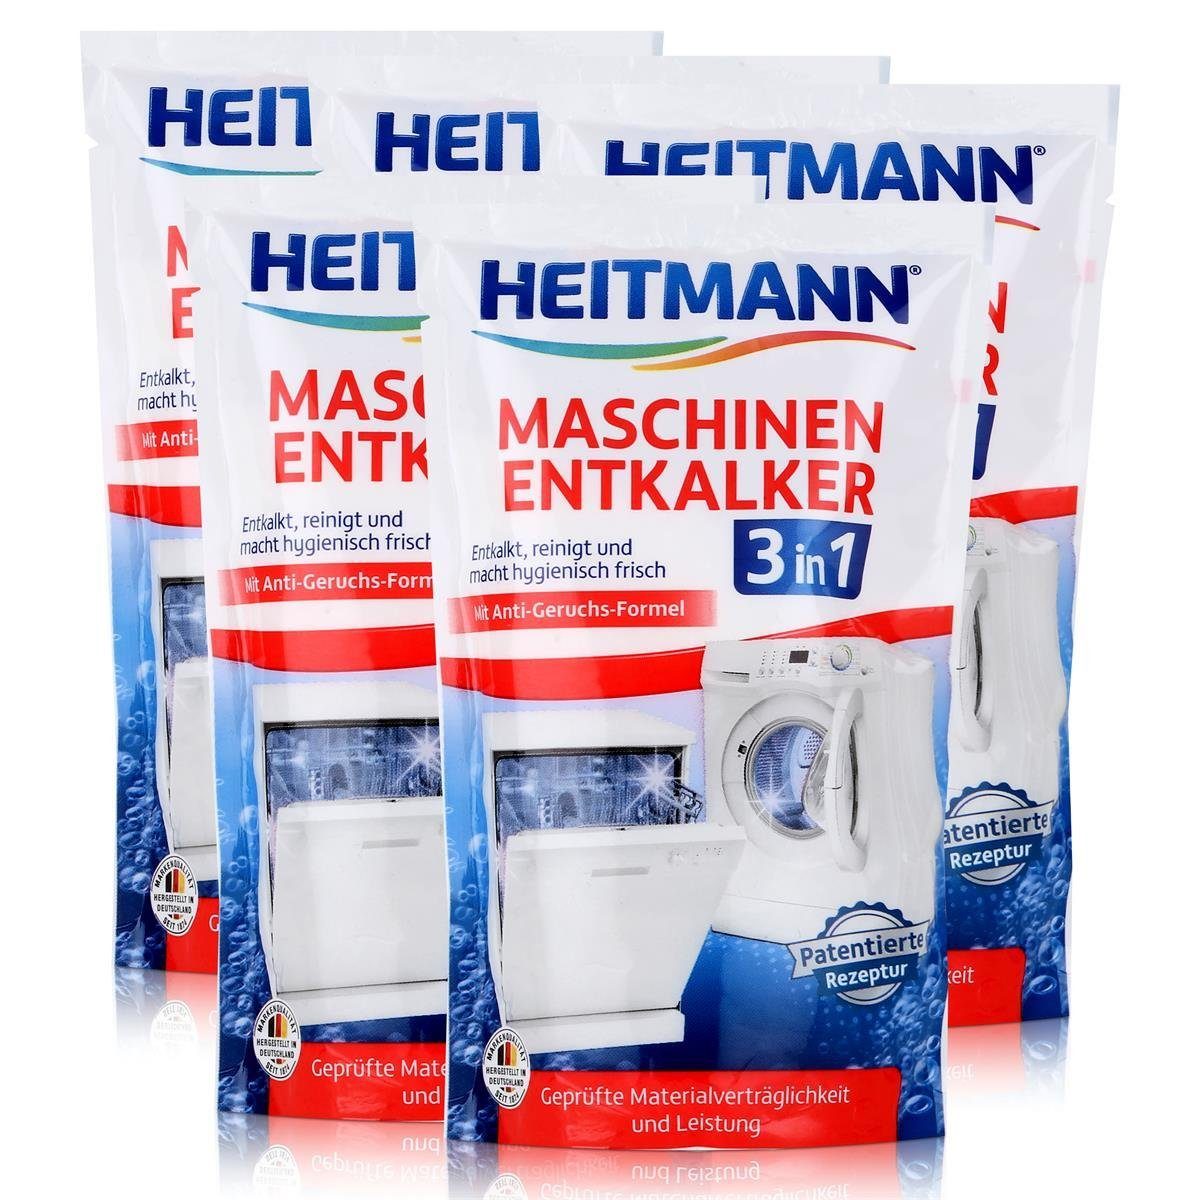 HEITMANN Heitmann Spezialwaschmittel und 175g Geschirrspüler - Maschinen Waschmaschinen Entkalker